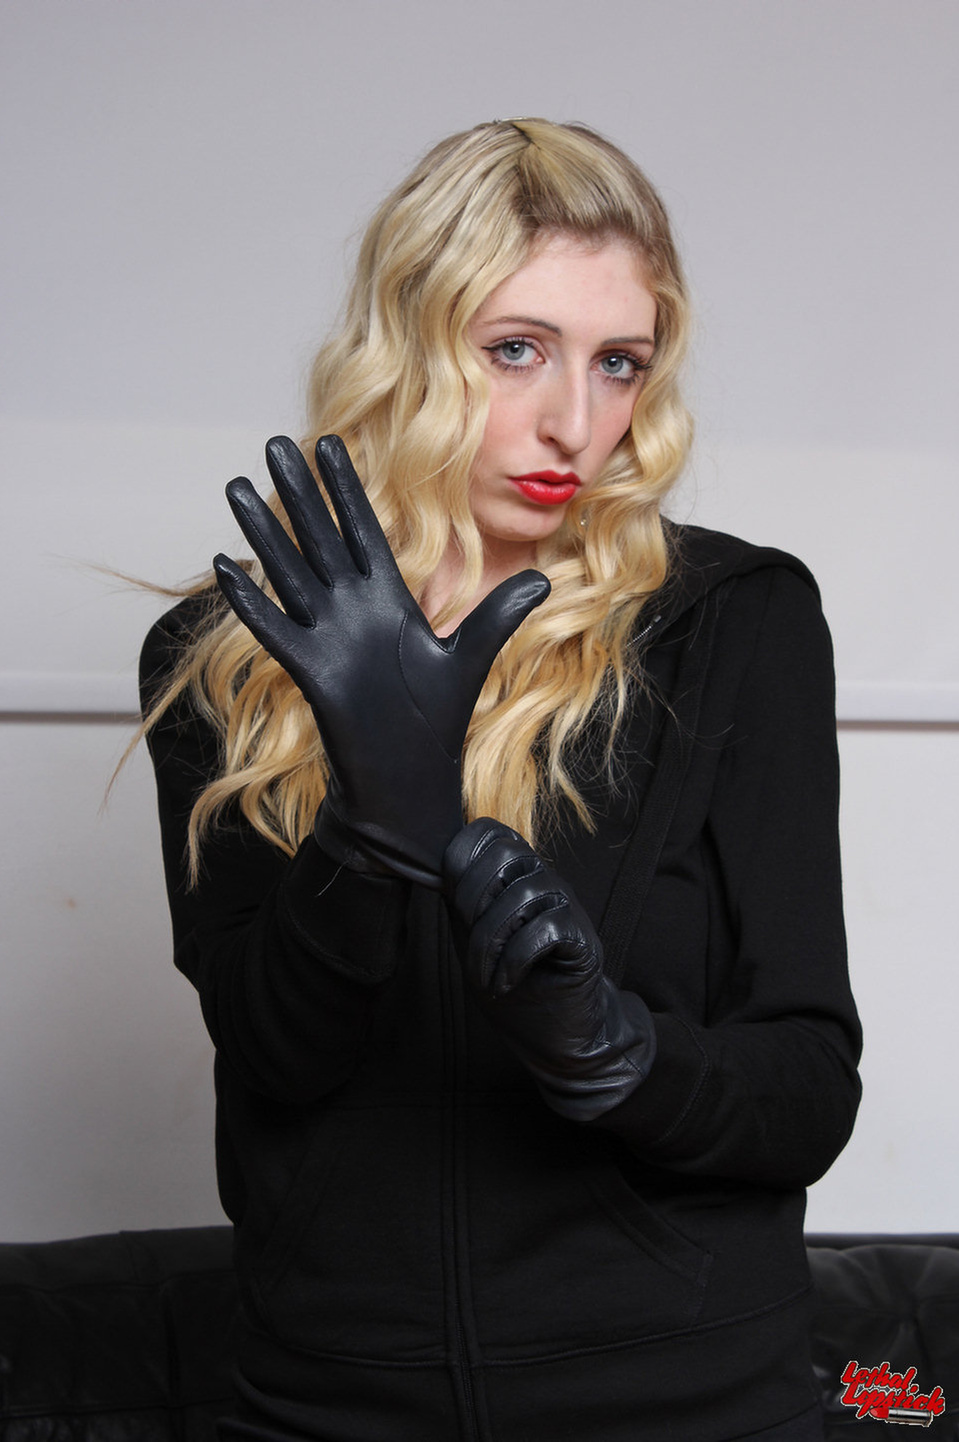 Lethal company girl. Hitwoman Silencer Gloves. Gloved hitwoman. Leather Gloves hitwoman Silencer.